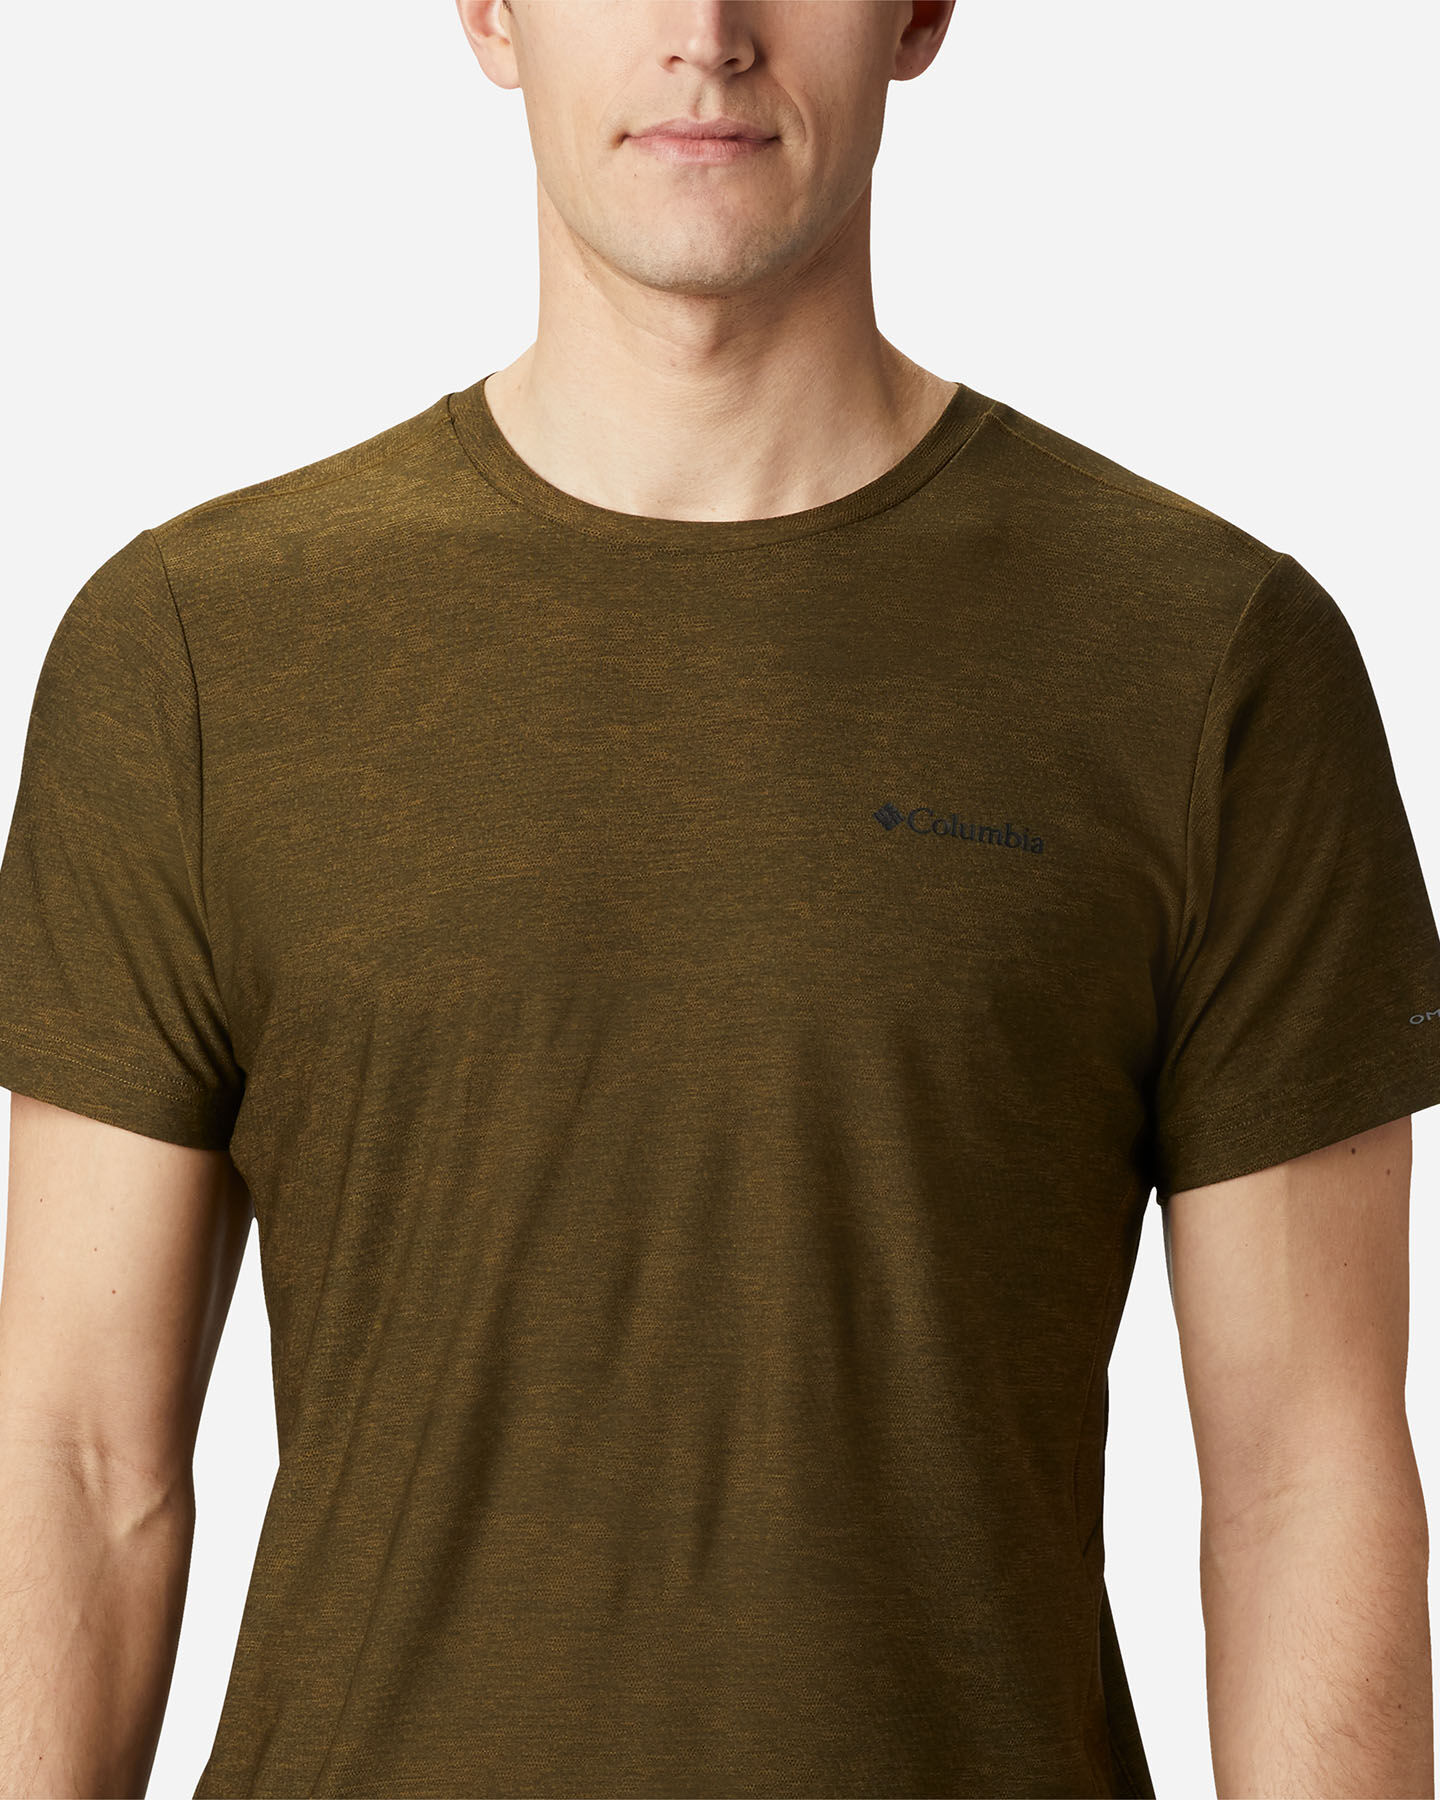  T-Shirt COLUMBIA MAXTRAIL LOGO M S5174874 scatto 4